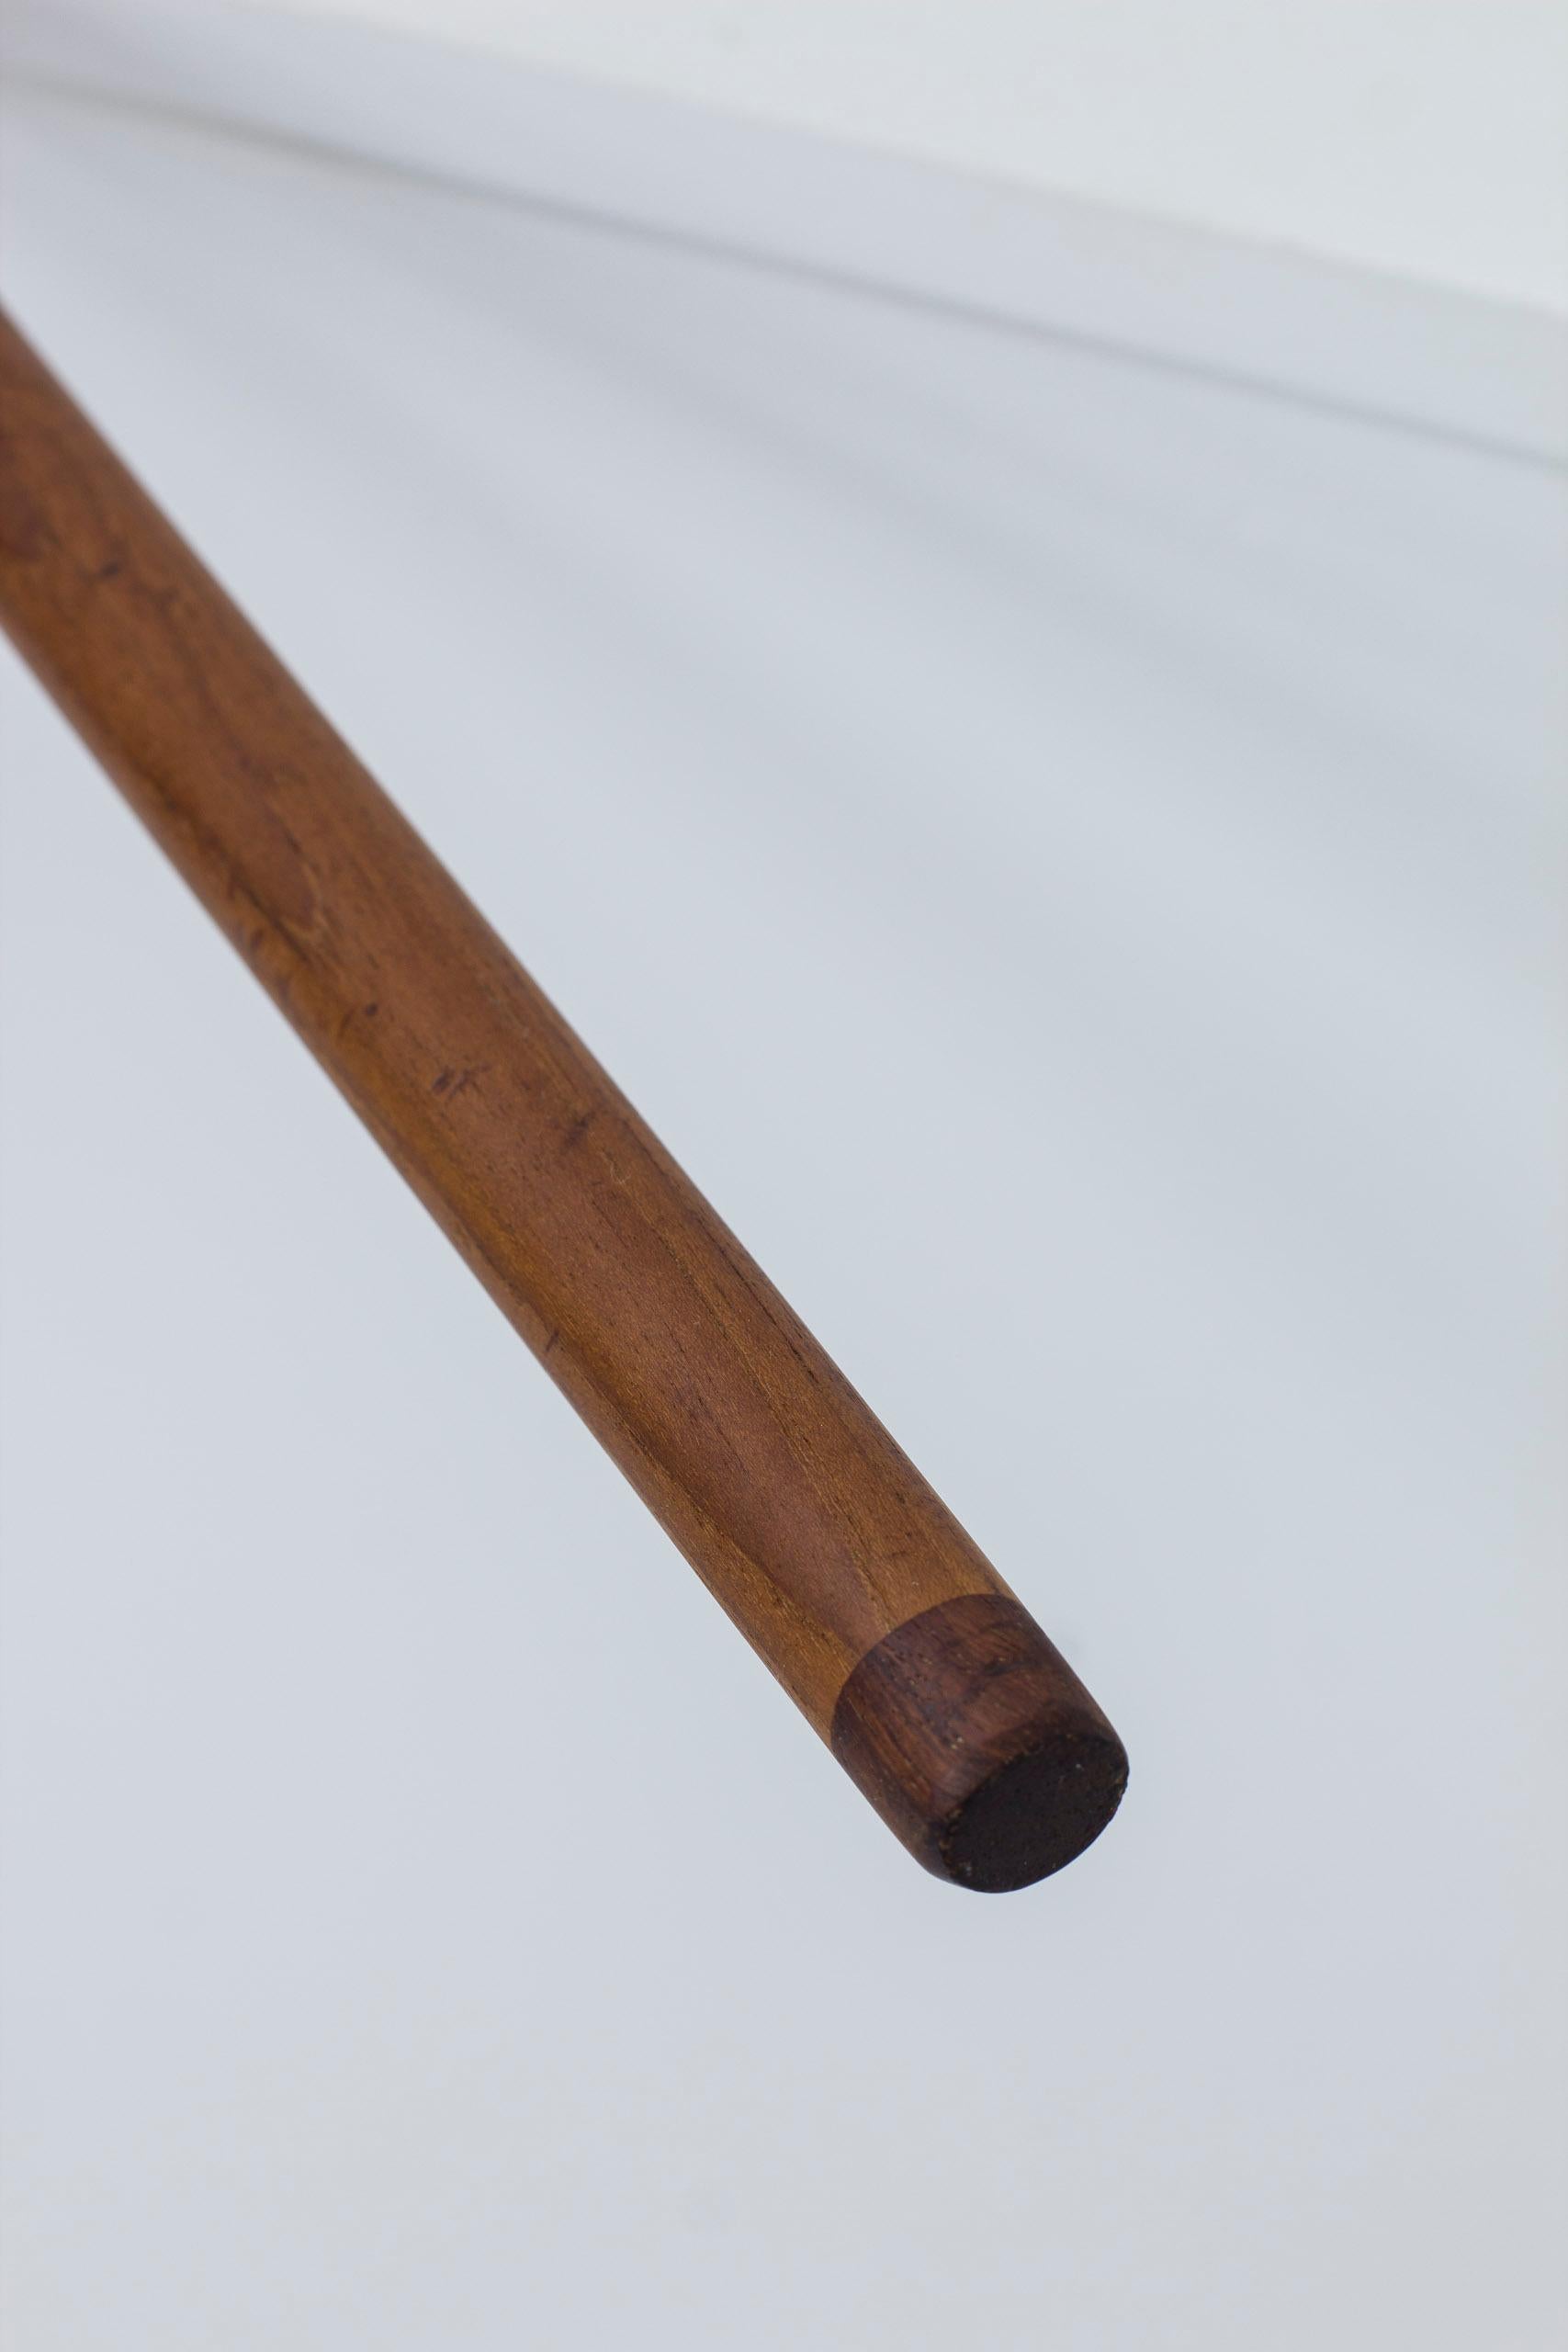 Mid-20th Century Walking stick/cane in teak an maple by Nanna & Jørgen Ditzel, Denmark, 1950s For Sale